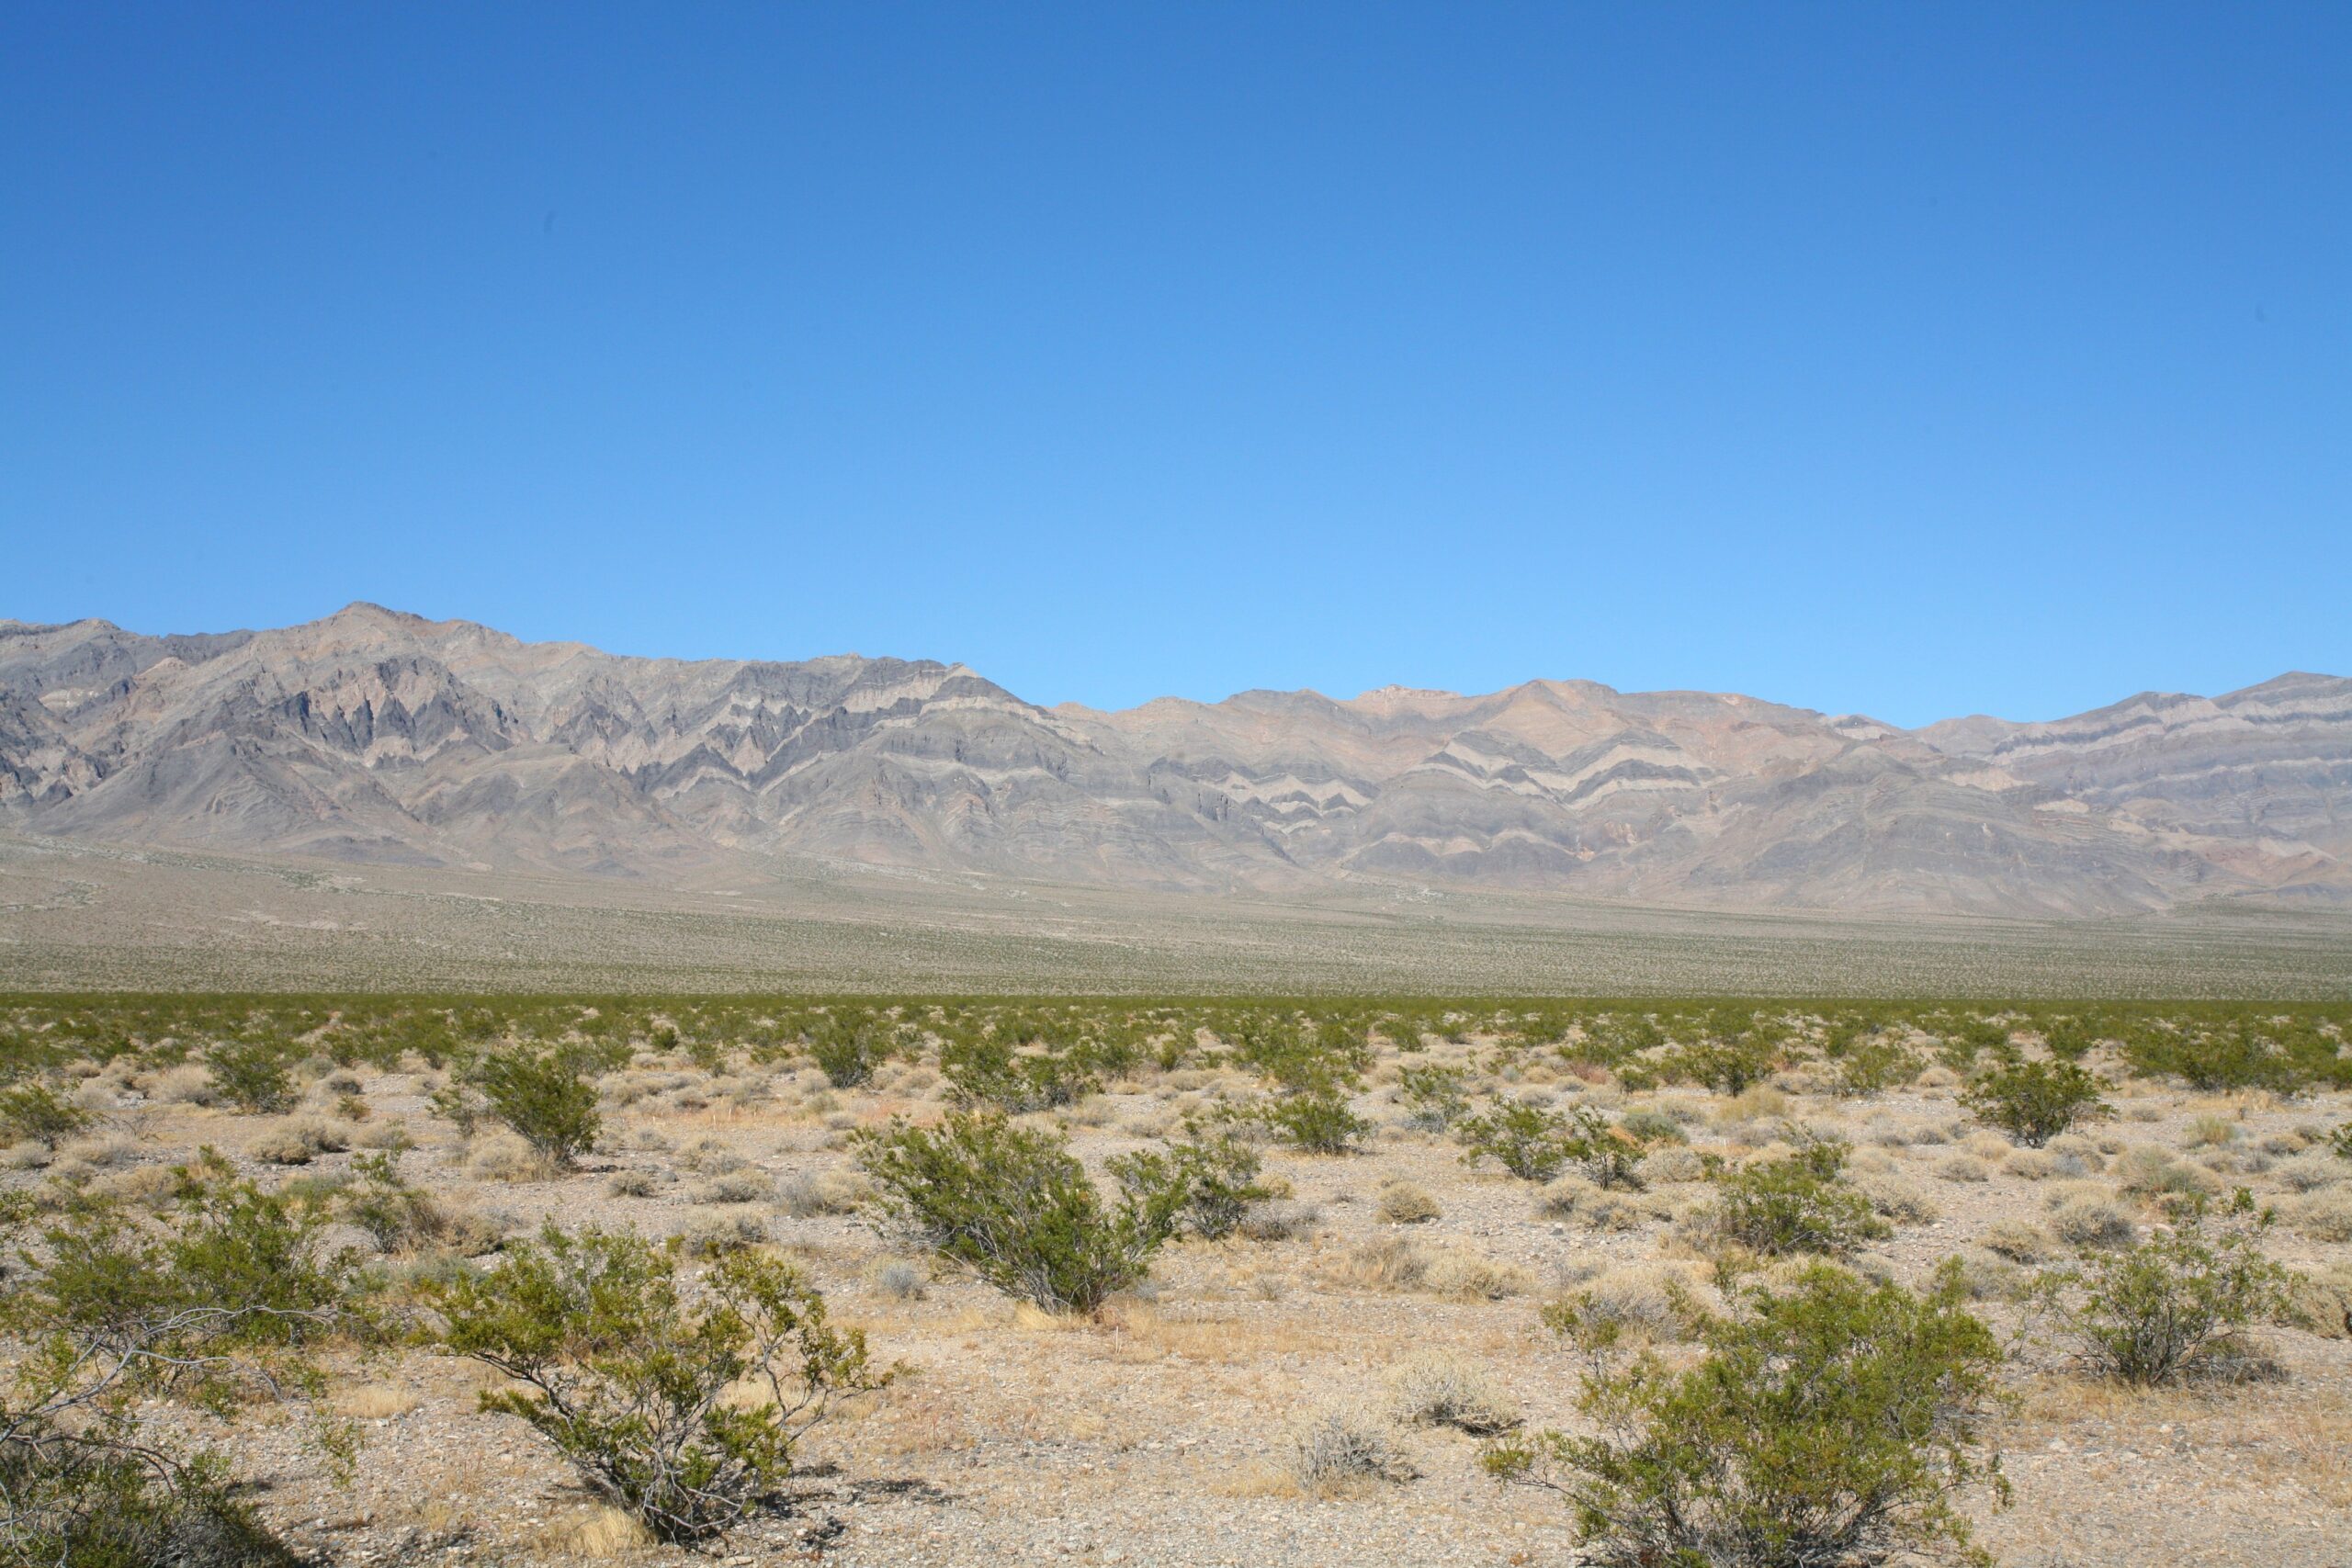 Ostrich Farming in Joshua Tree, Twentynine Palms and Wonder Valley in the Mojave Desert, California